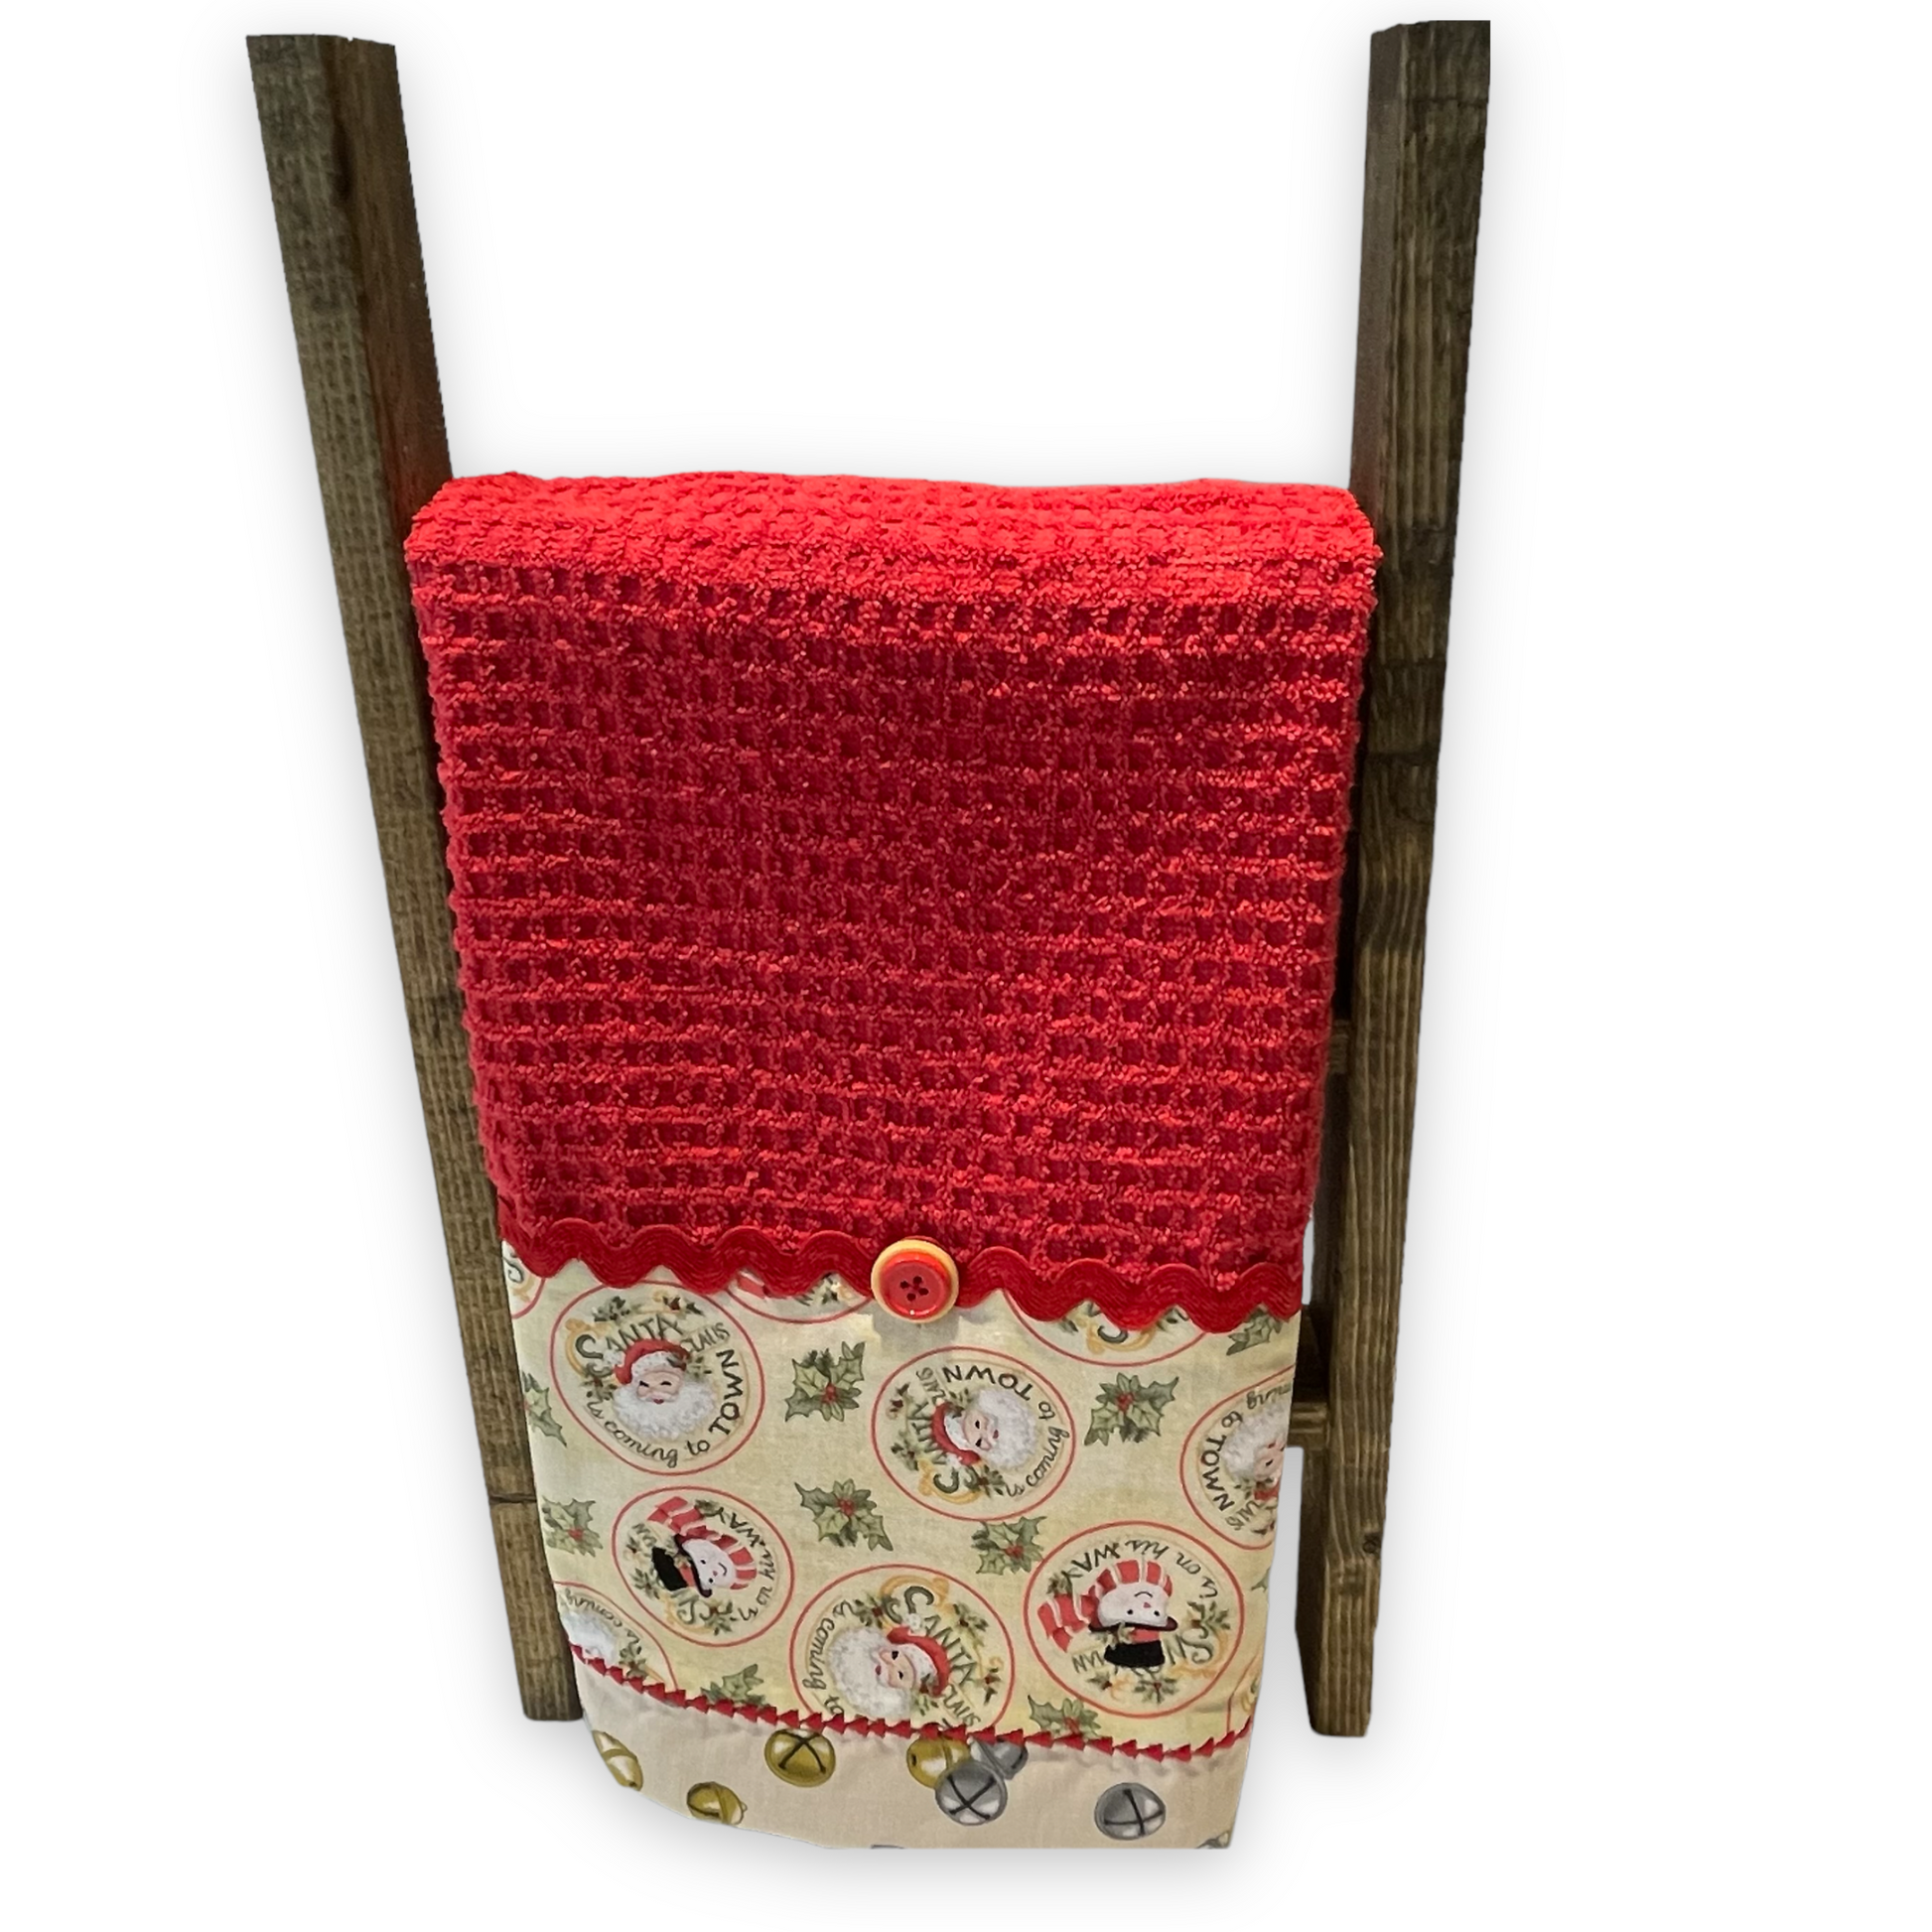 Cute Red Handcrafted Kitchen Dish Towel, Retro Santa Kitchen Tea Towel - Home Stitchery Decor